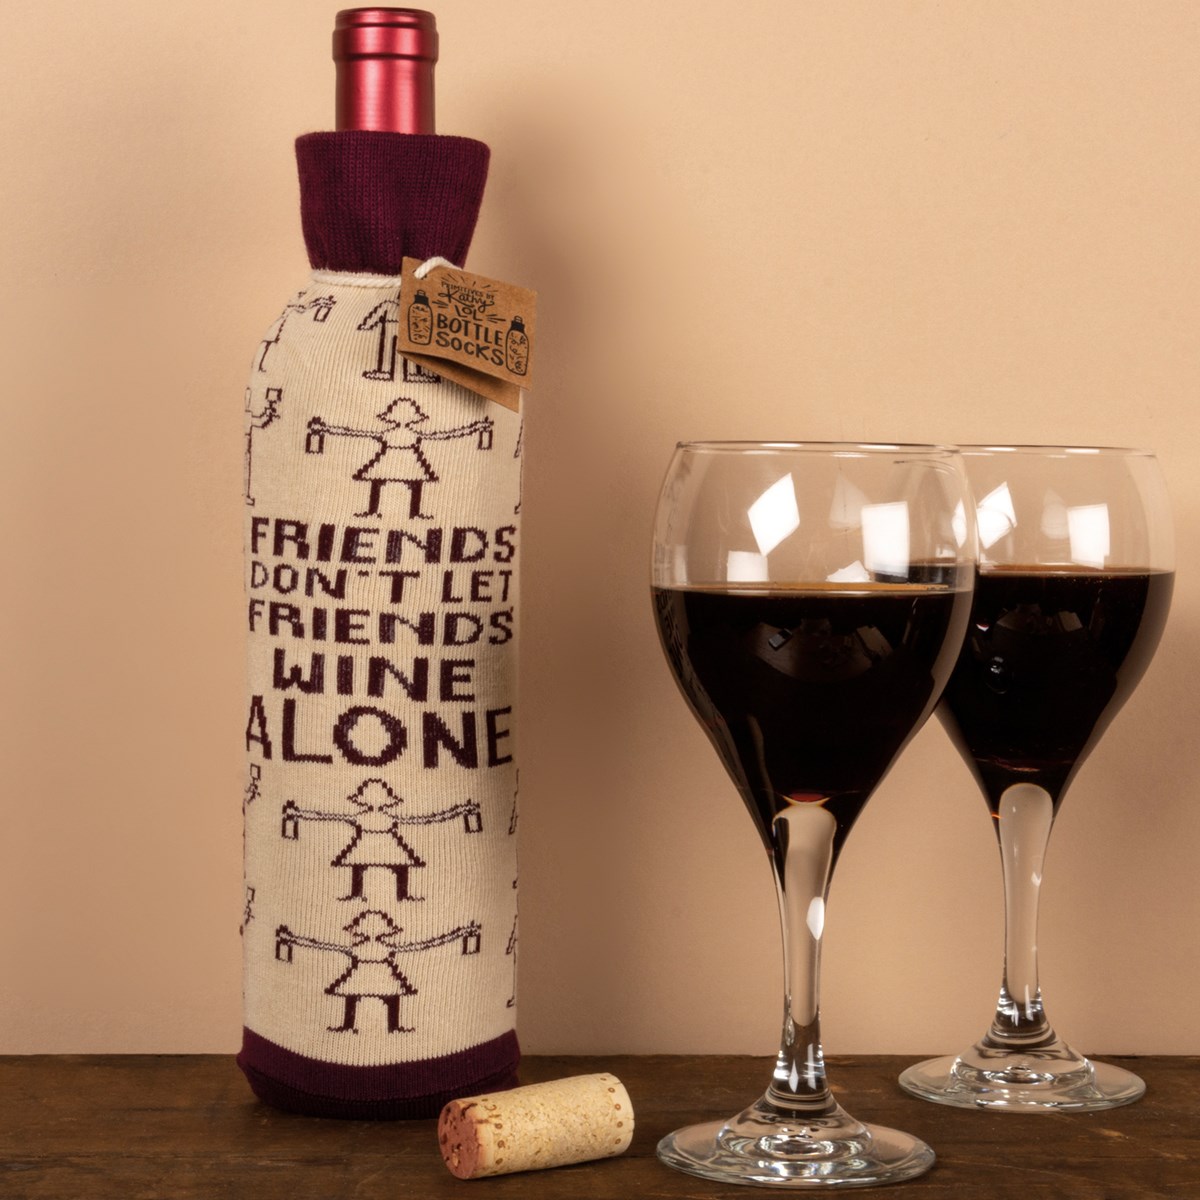 Don't Let Friends Wine Alone Bottle Sock - Cotton, Nylon, Spandex